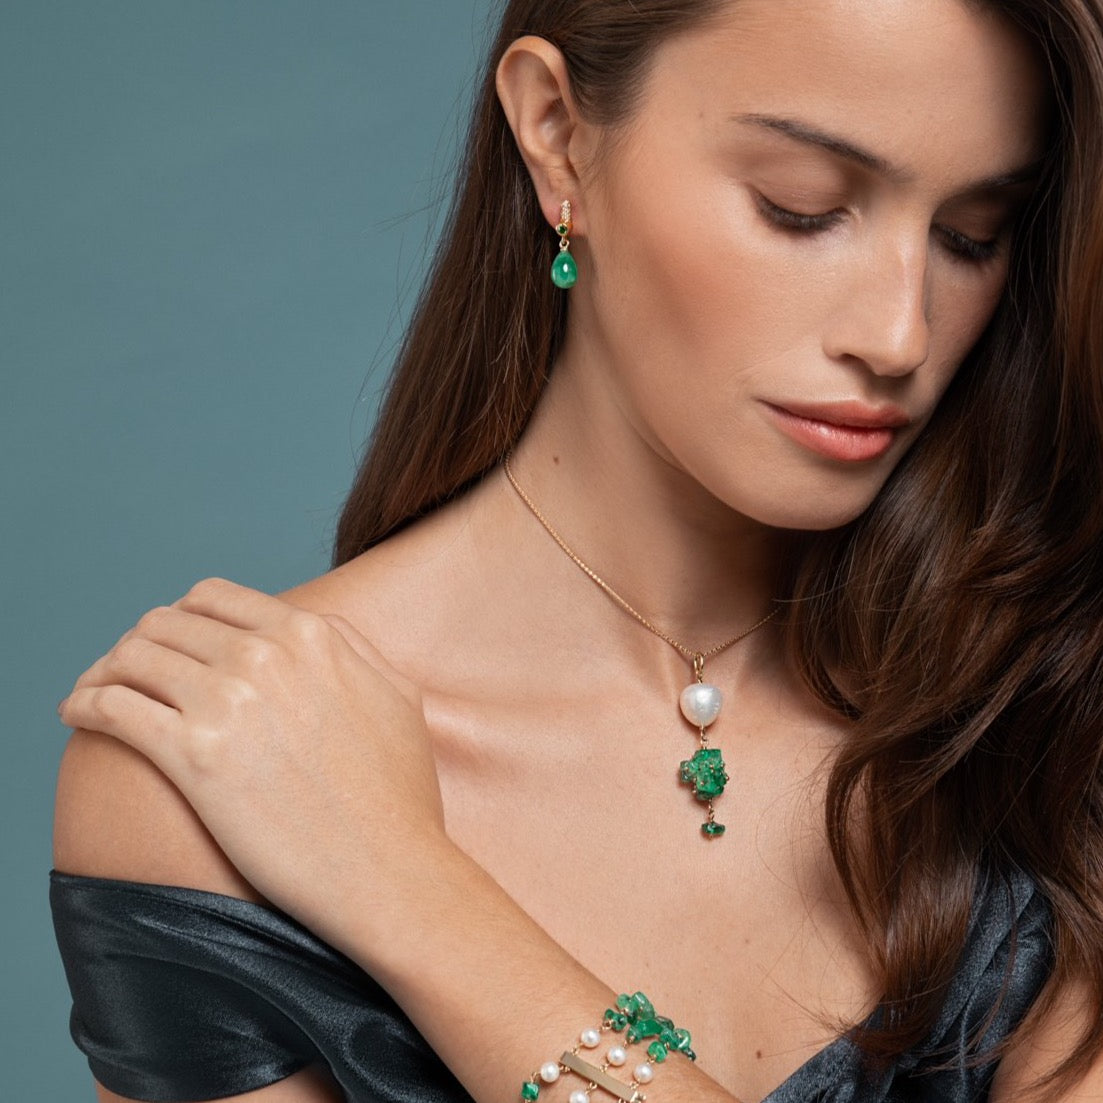 Antique Design Pearl Ear Drops Ruby Emerald Stones Earrings Buy Now